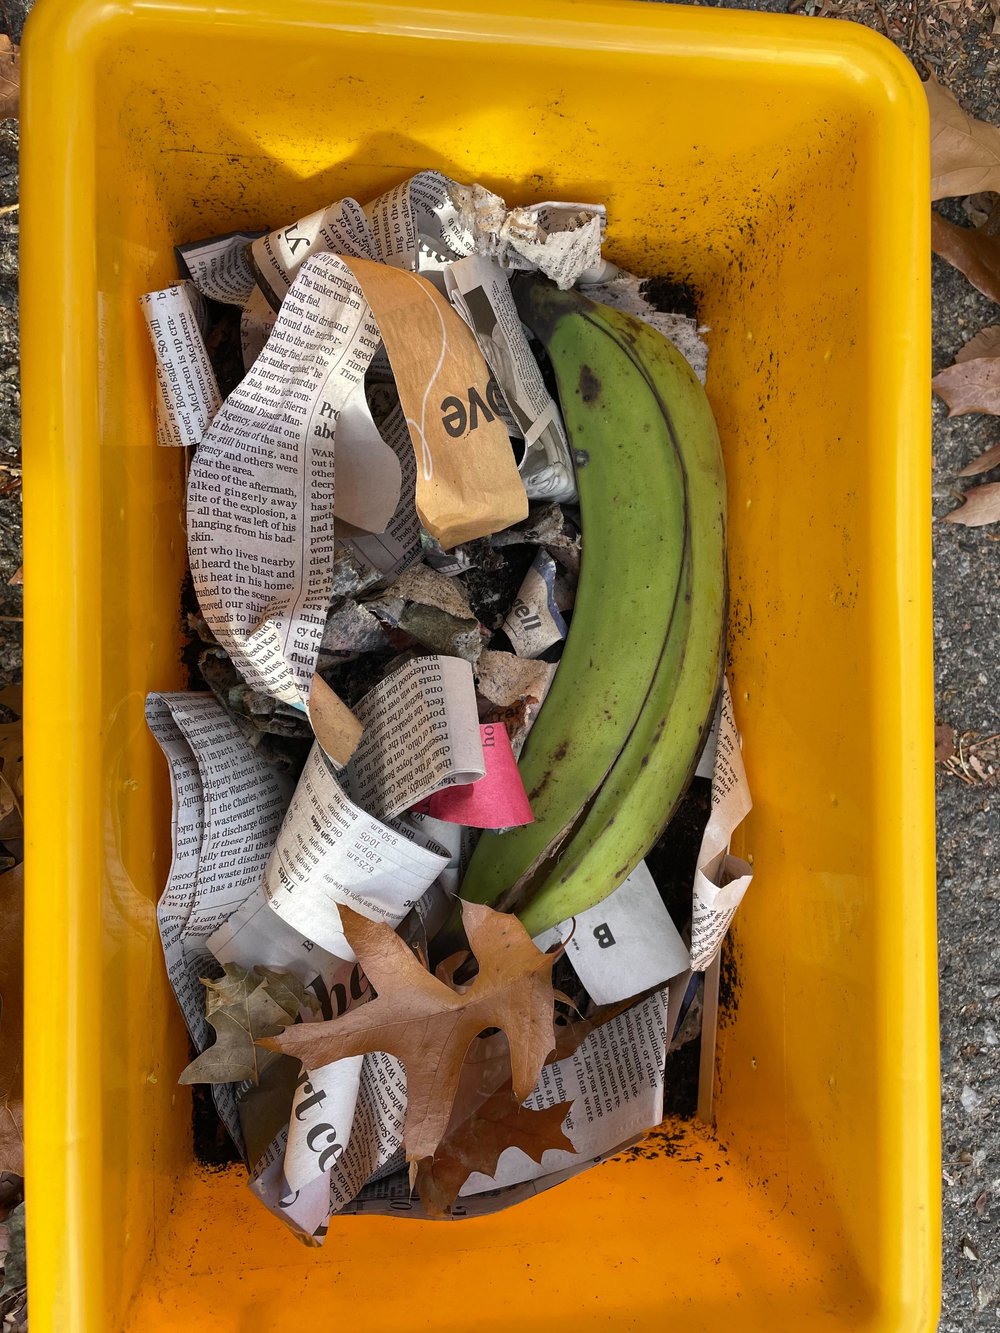 banana in bin.jpg